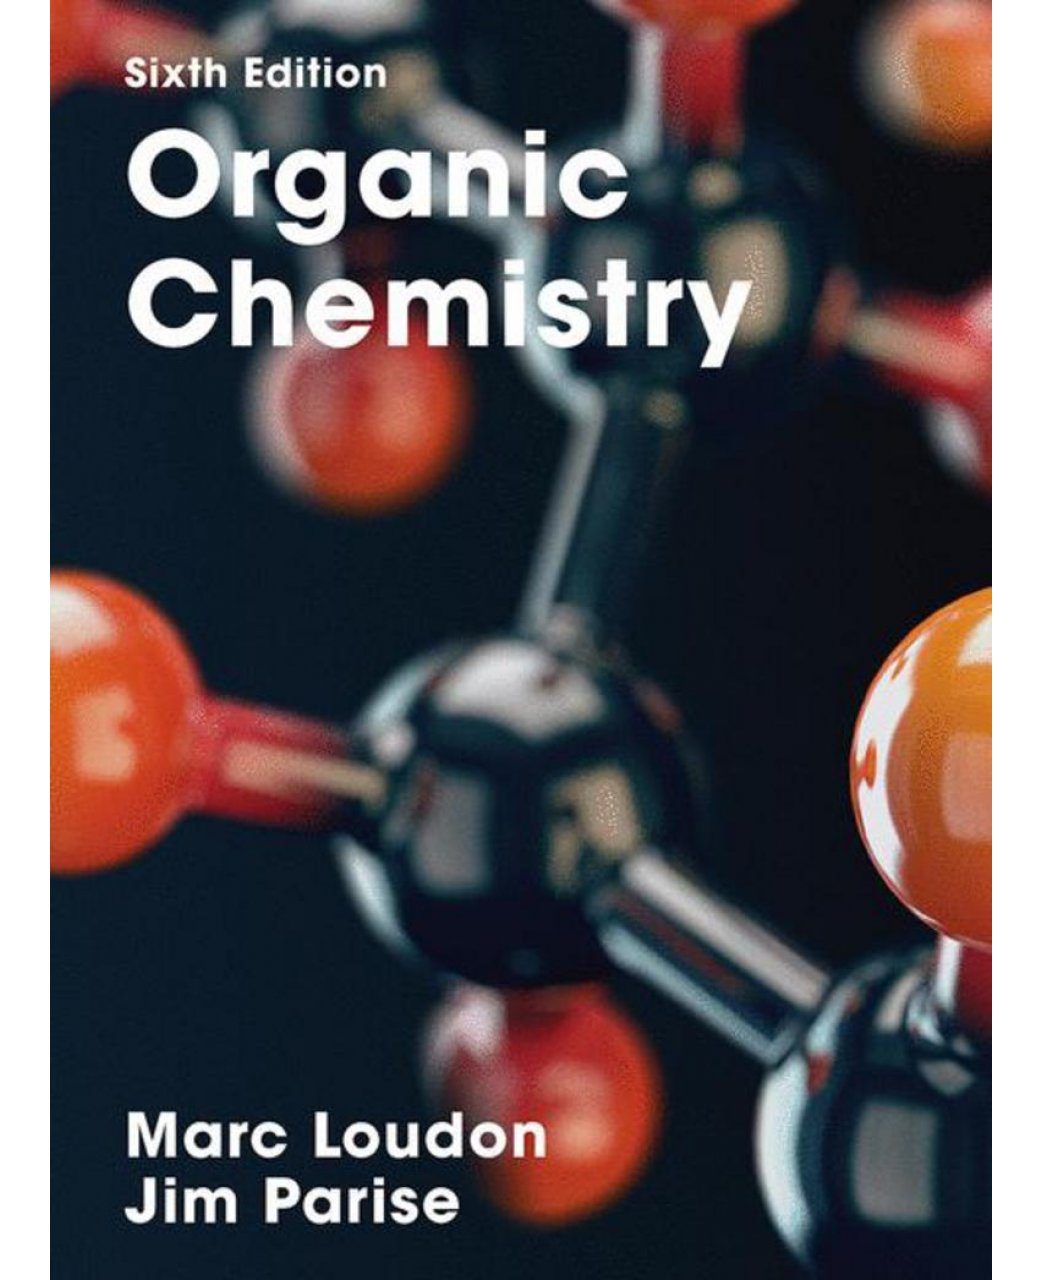 Organic Chemistry book.